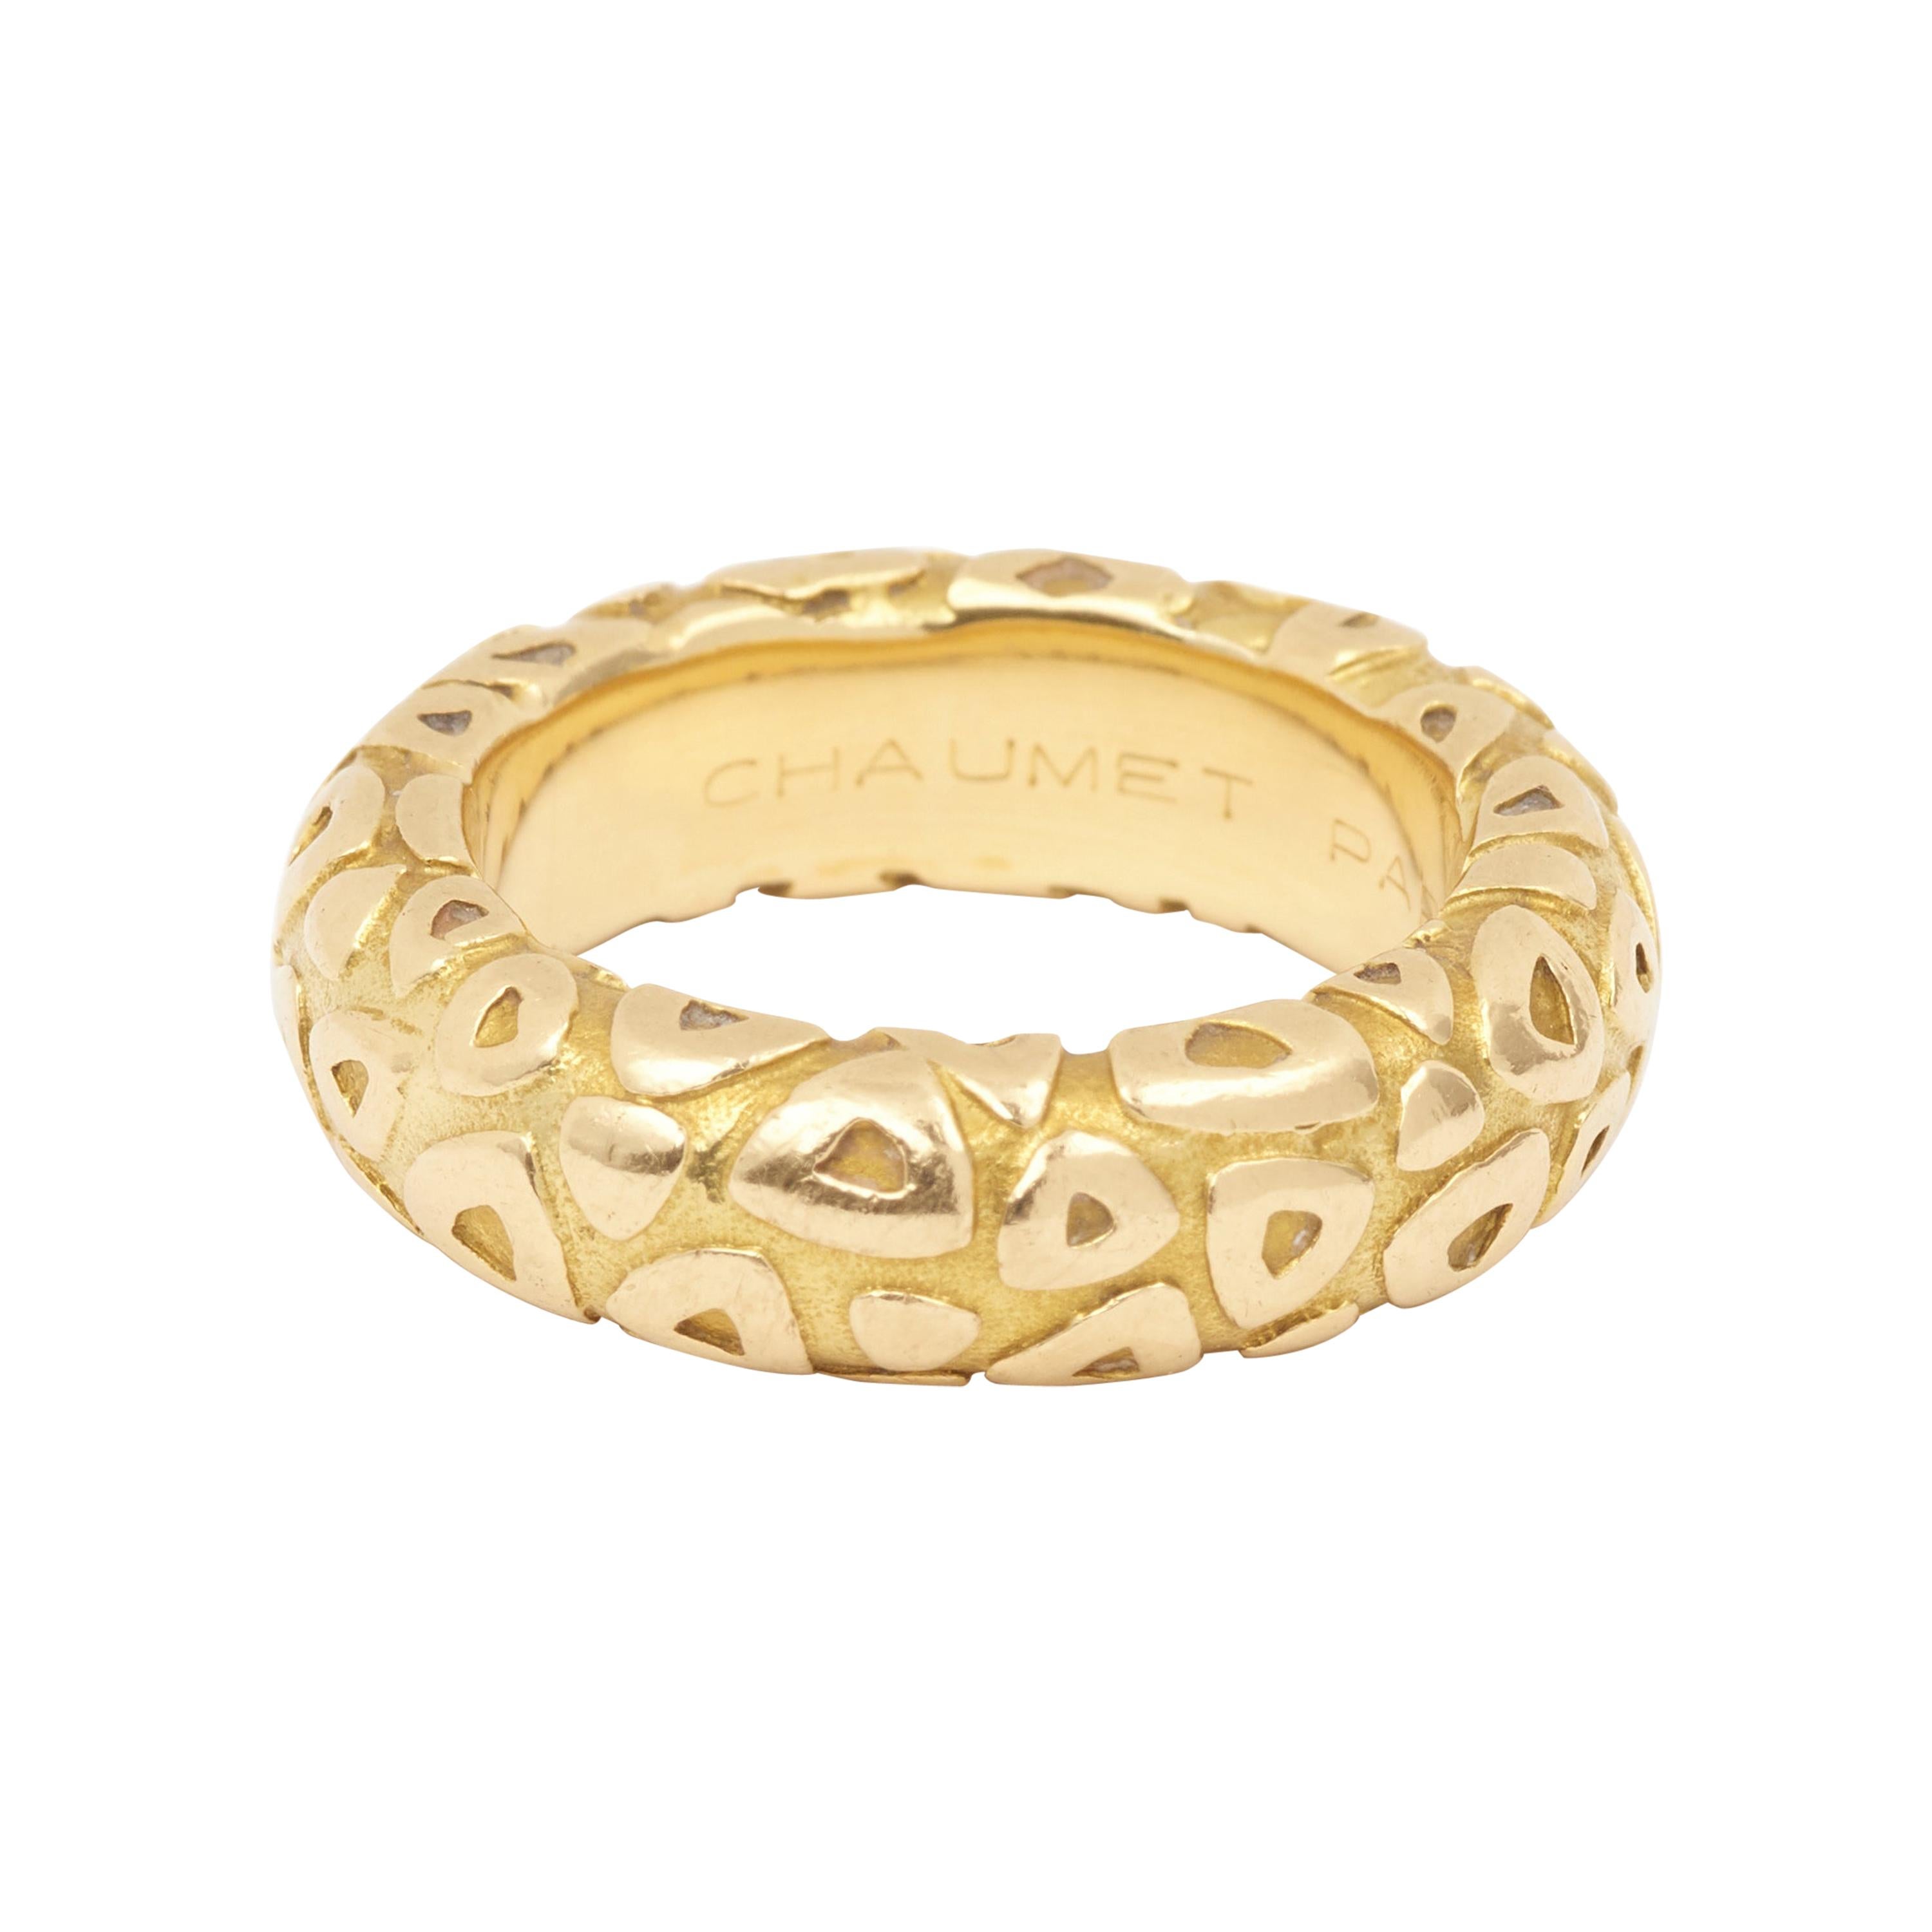 Chaumet 18 Carat Yellow Gold Bangle Ring